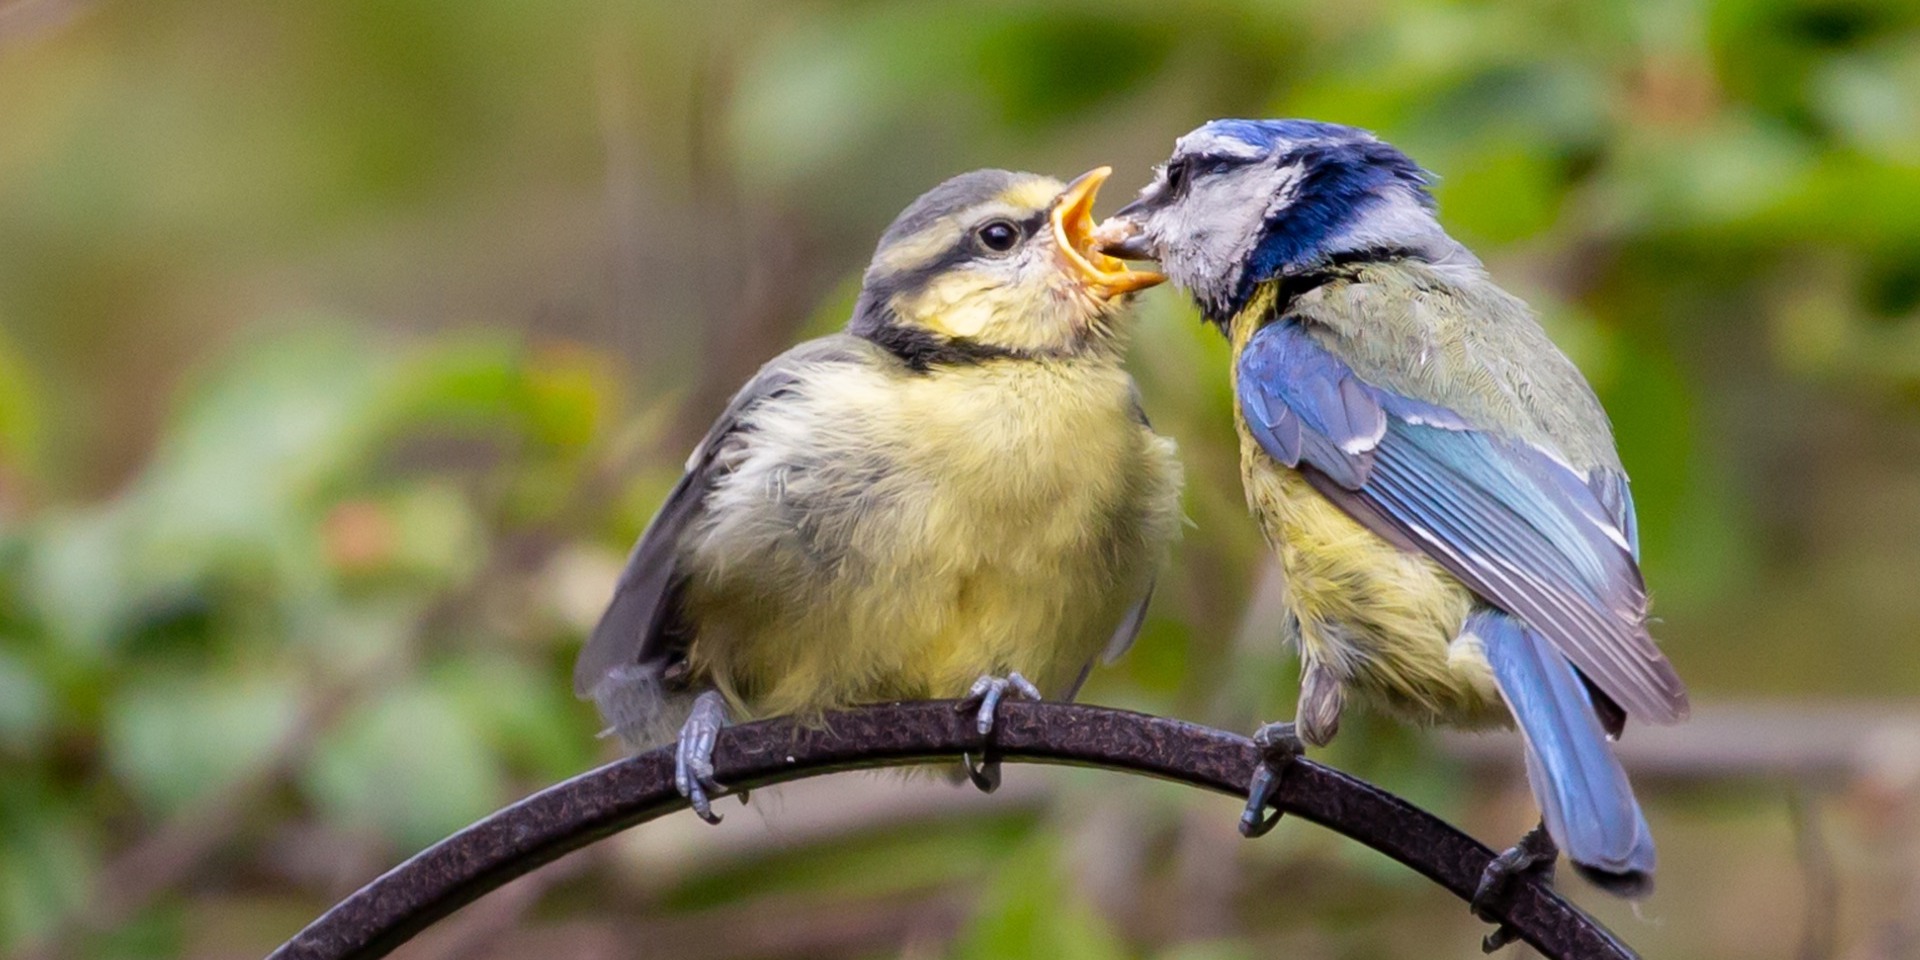 Bird feeding other bird. Metaphor for feeding news.